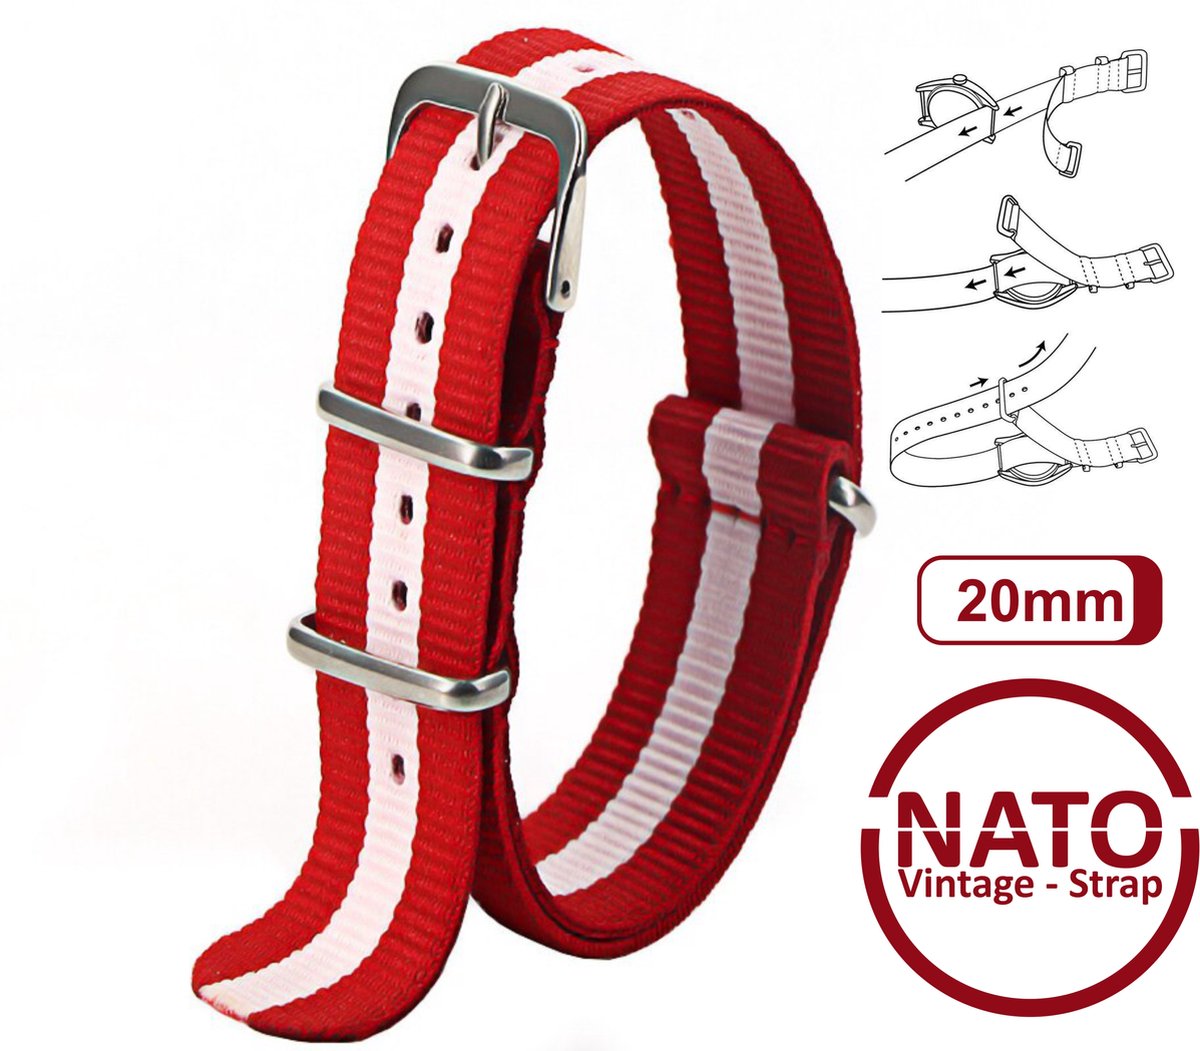 20mm Premium Nato Strap Rood Wit gestreept - Vintage James Bond - Nato Strap collectie - Mannen - Horlogeband - 20 mm bandbreedte voor oa. Seiko Rolex Omega Casio en Citizen